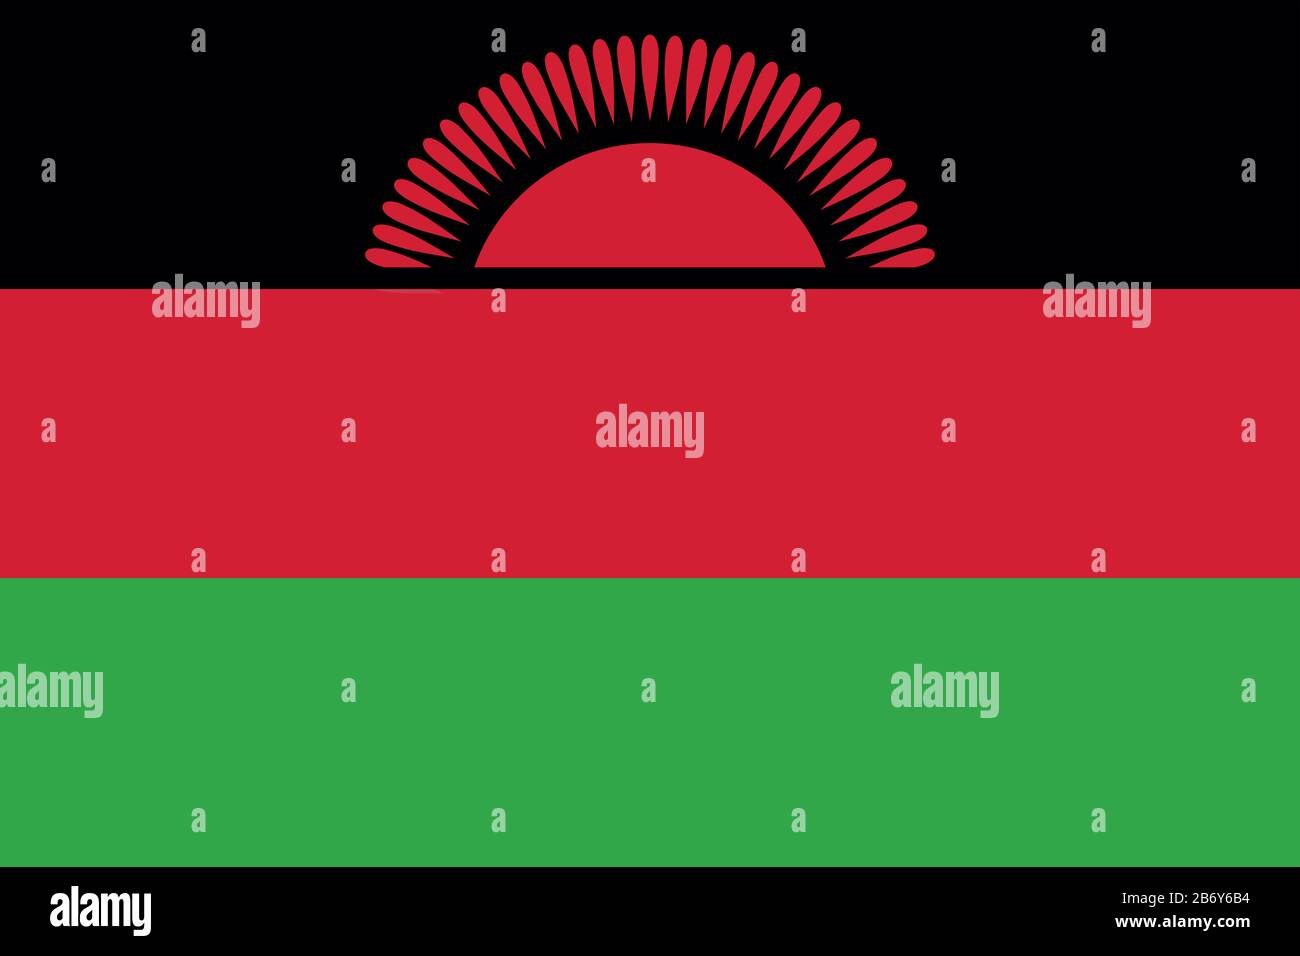 Flagge von Malawi - Malawian-Flagge Standardverhältnis - True RGB-Farbmodus Stockfoto